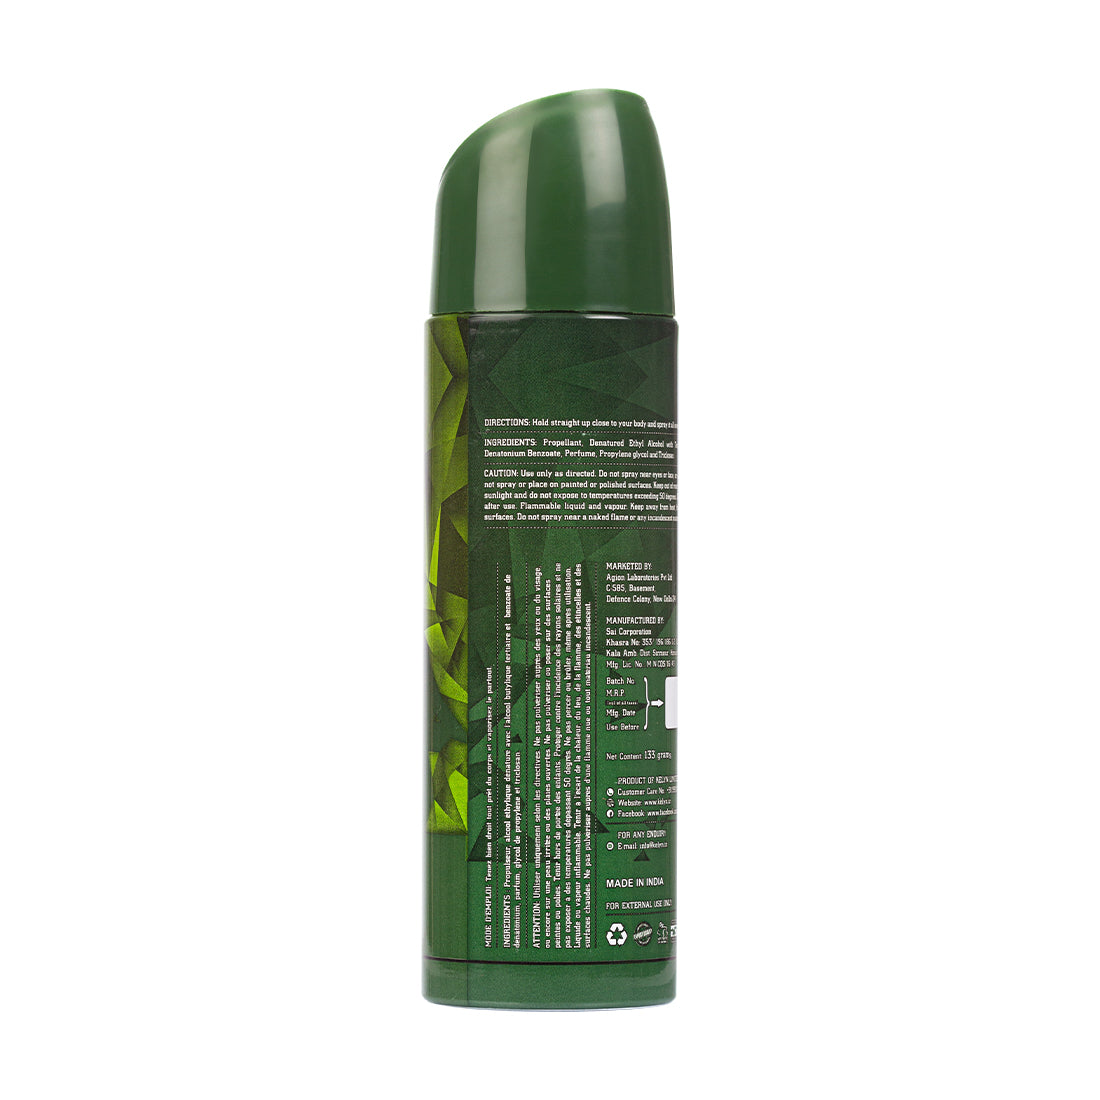 Bare Ultra Edge Deodorant for Men Body Spray, 200 ml